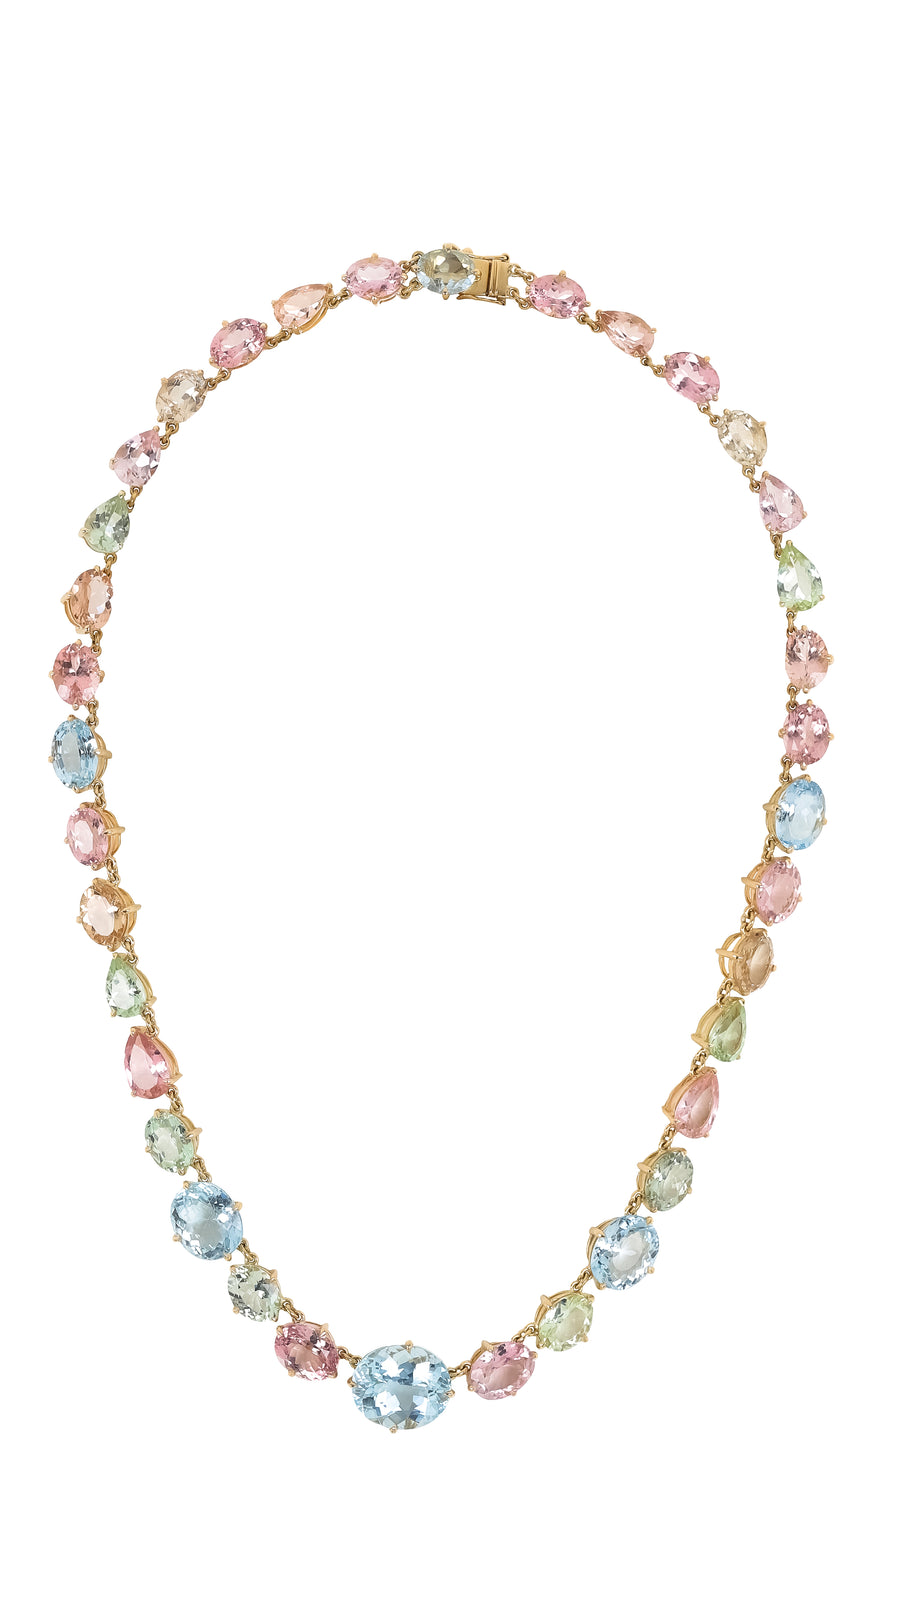 Aquamarine & tourmaline macaroon necklace